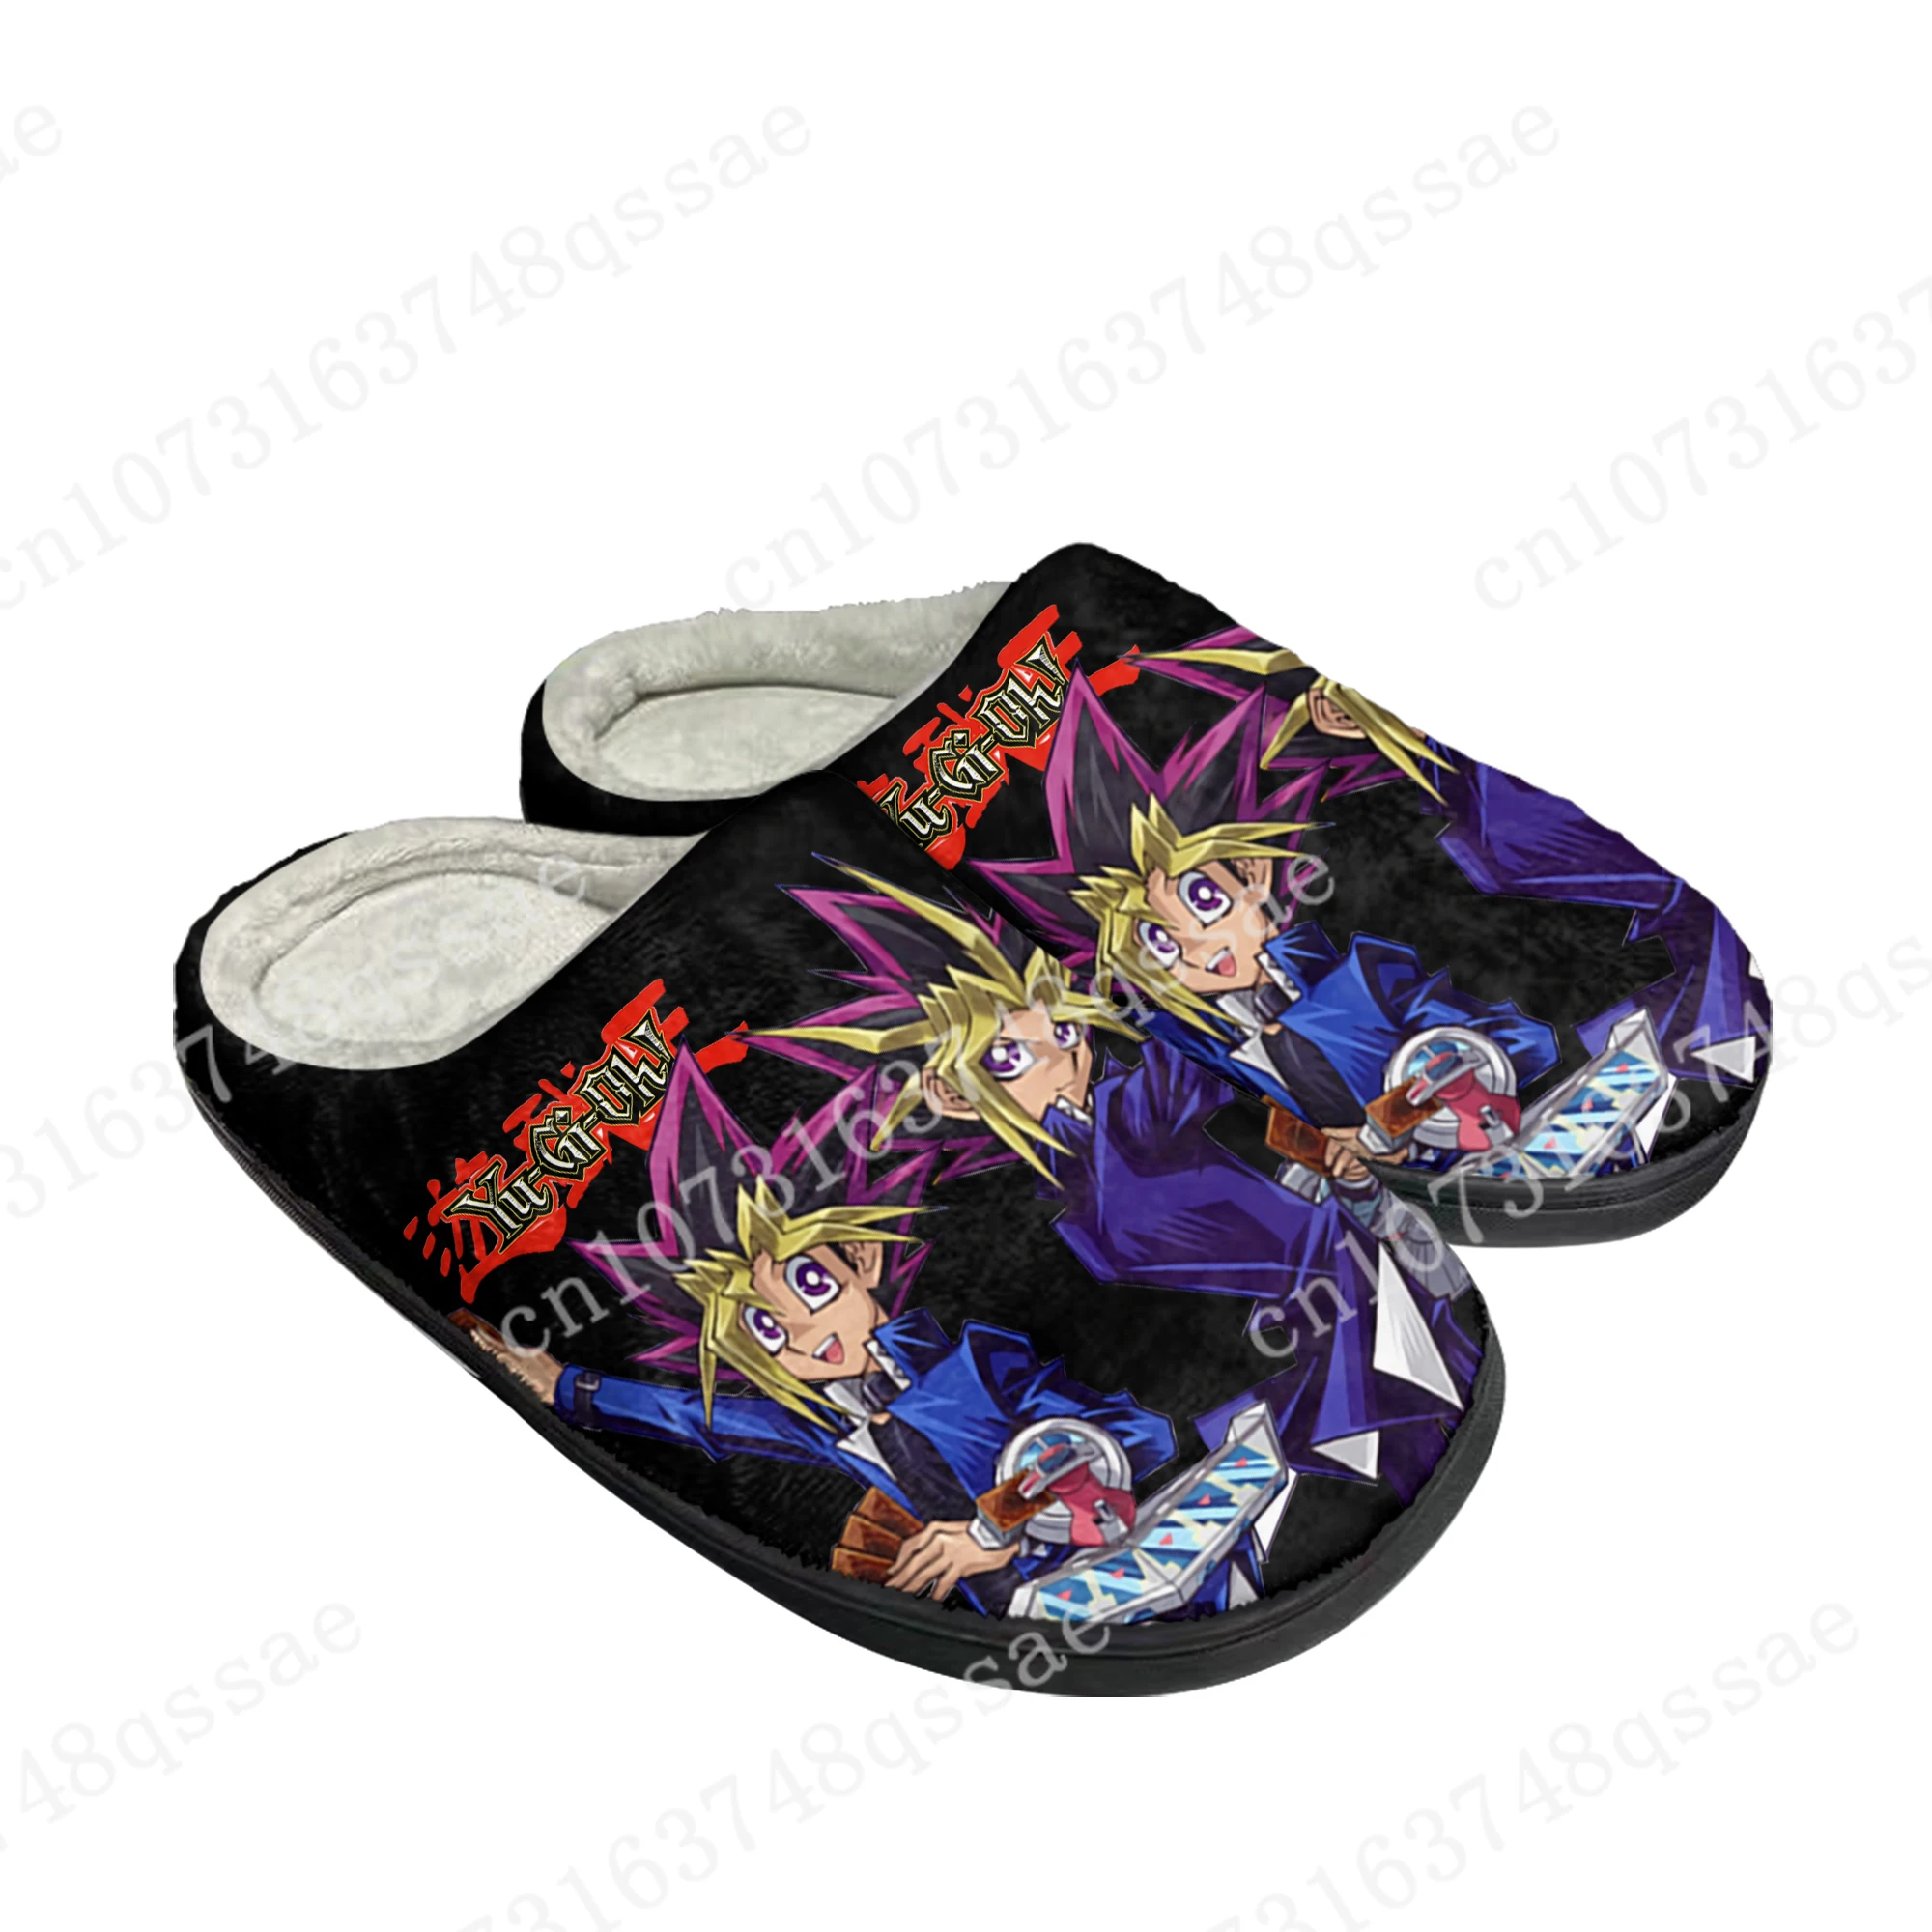 

Тапочки Yu-Gi-Oh Yami Mutou, домашние хлопковые тапочки на заказ, мужские и женские сандалии, плюшевая сохраняющая тепло обувь, термотапочки